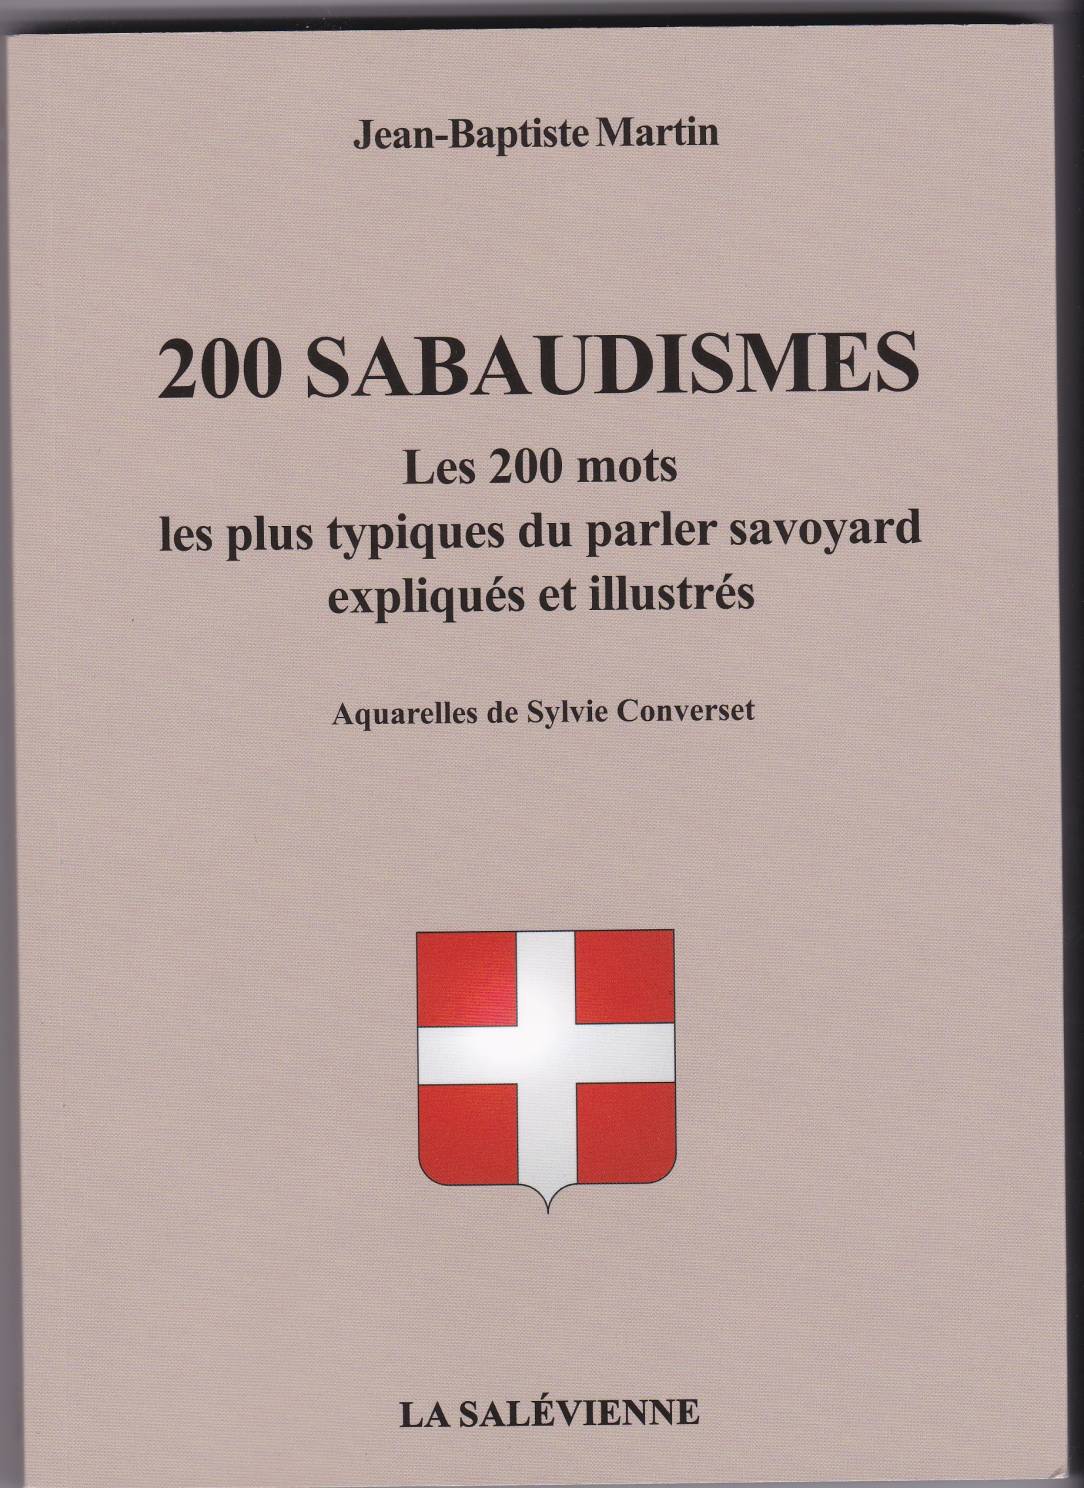 200 sabaudismes